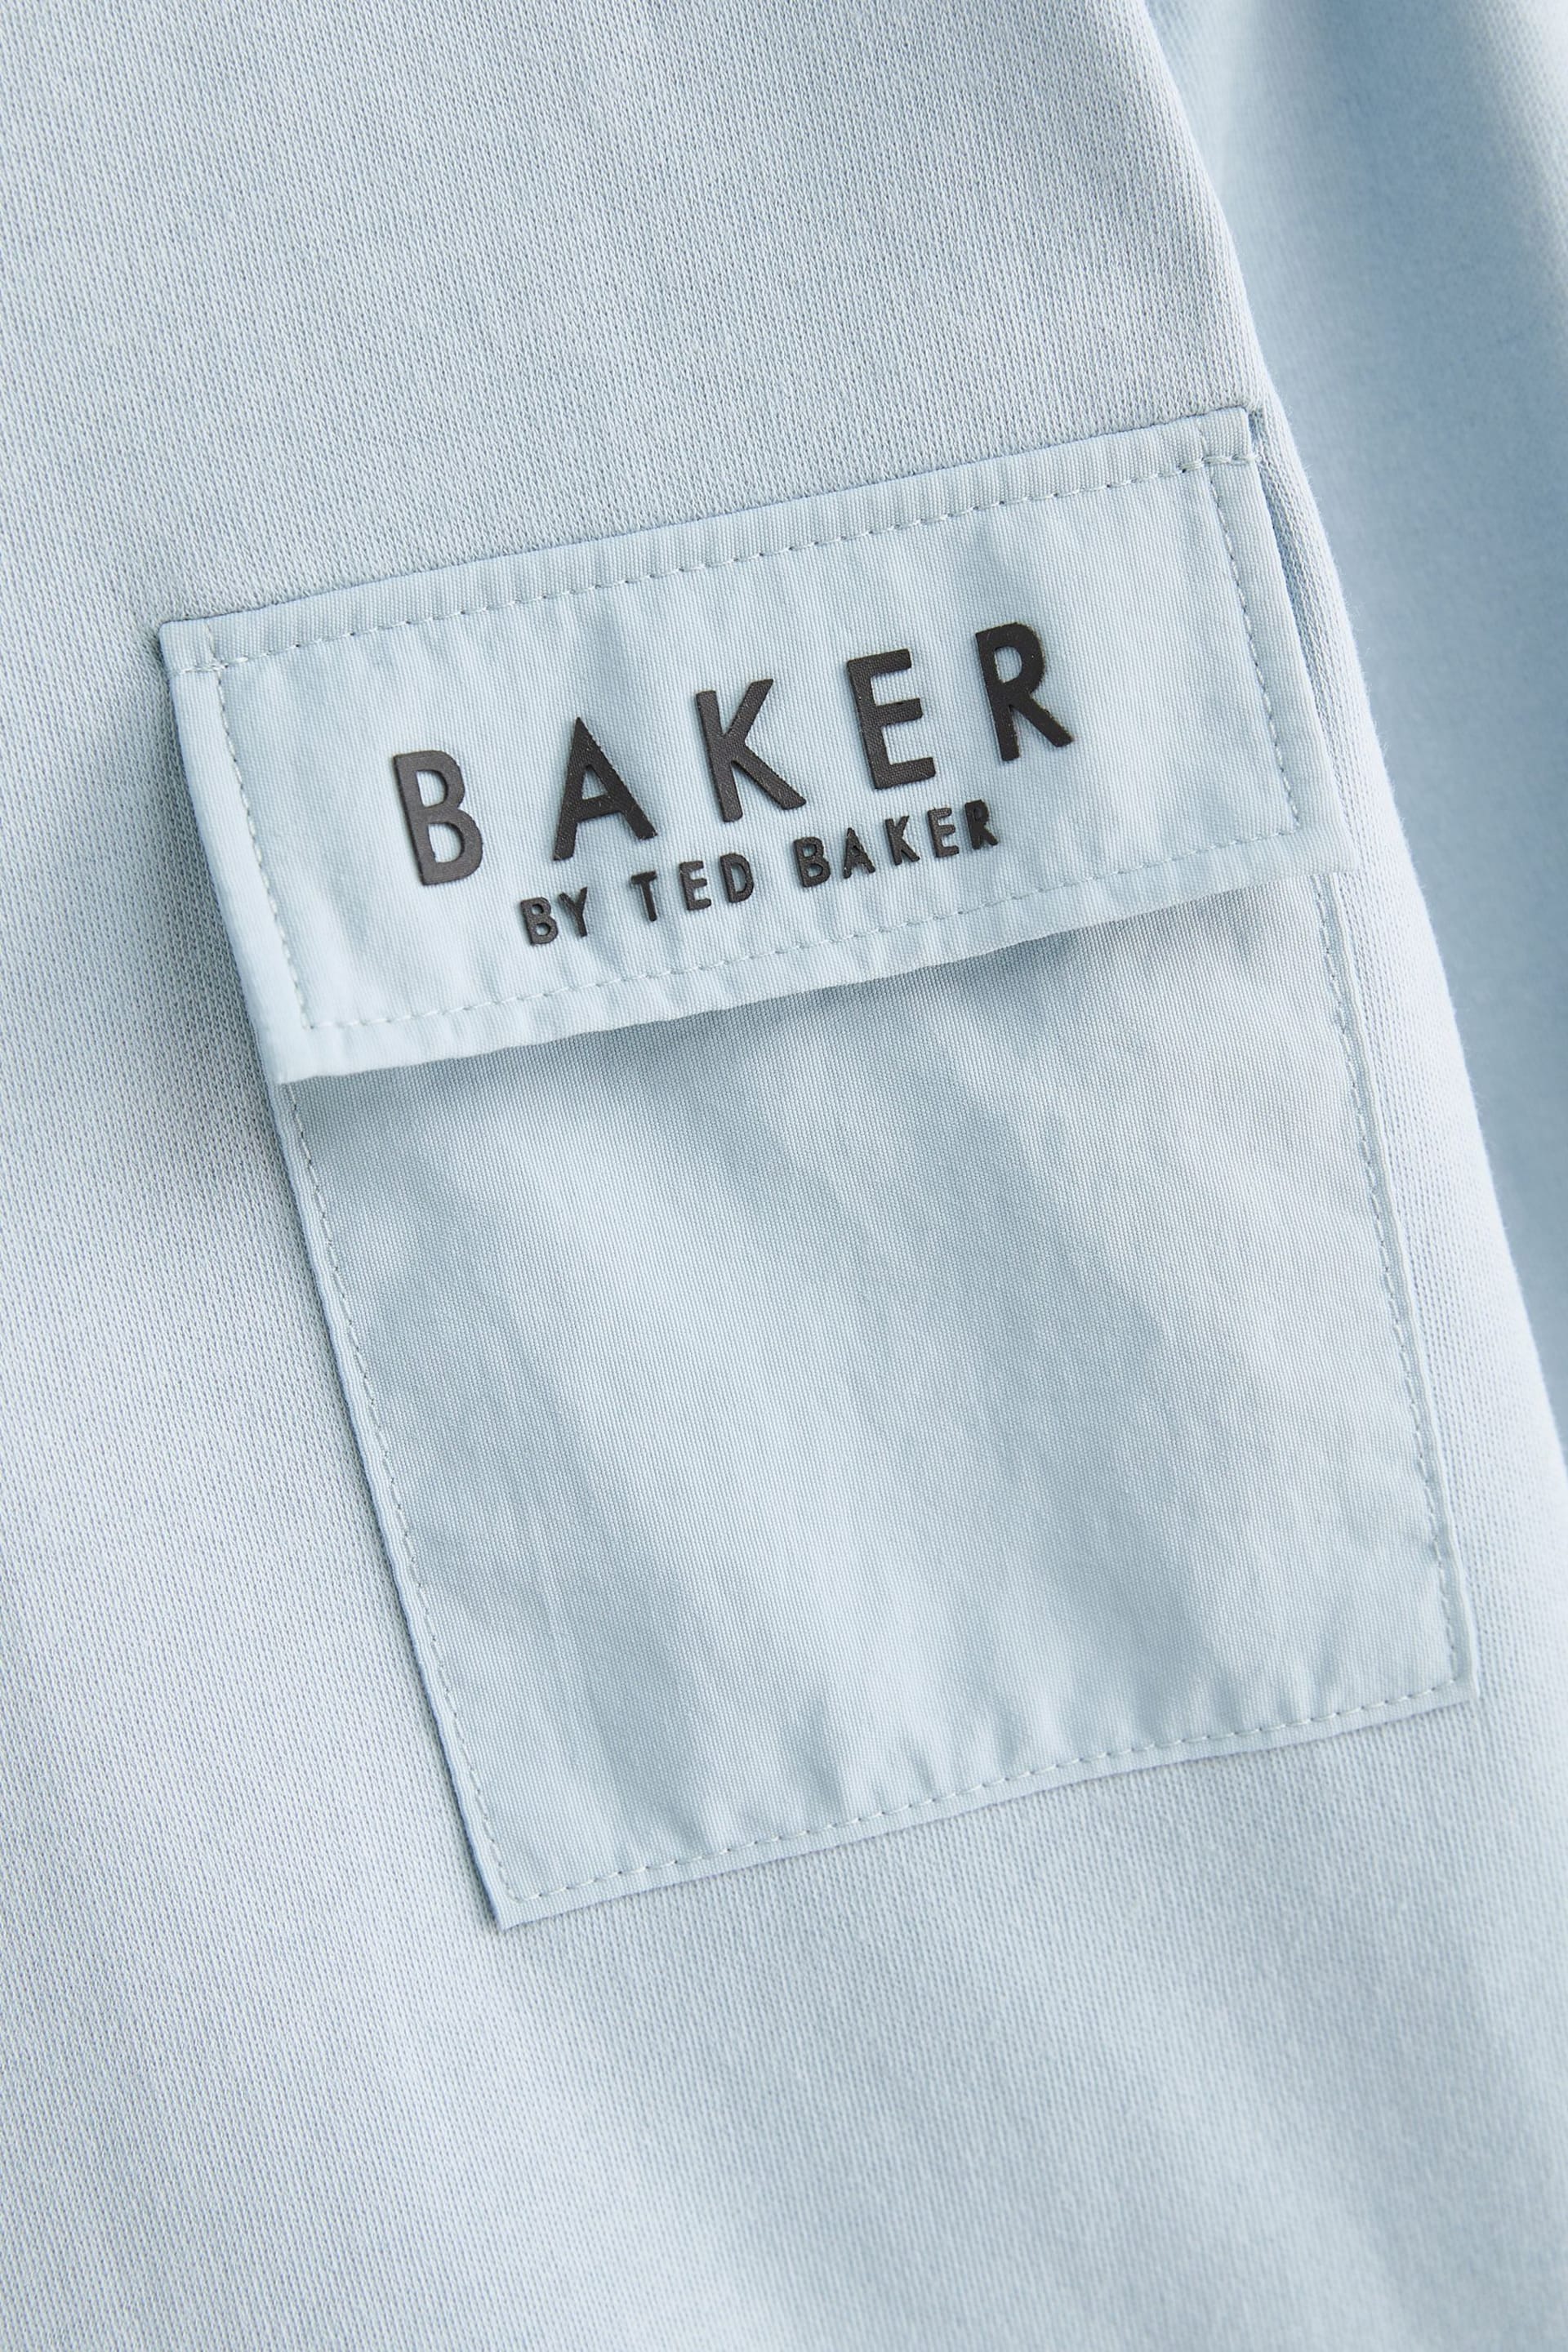 Baker by Ted Baker Long Sleeve Pocket T-Shirt - Image 9 of 10